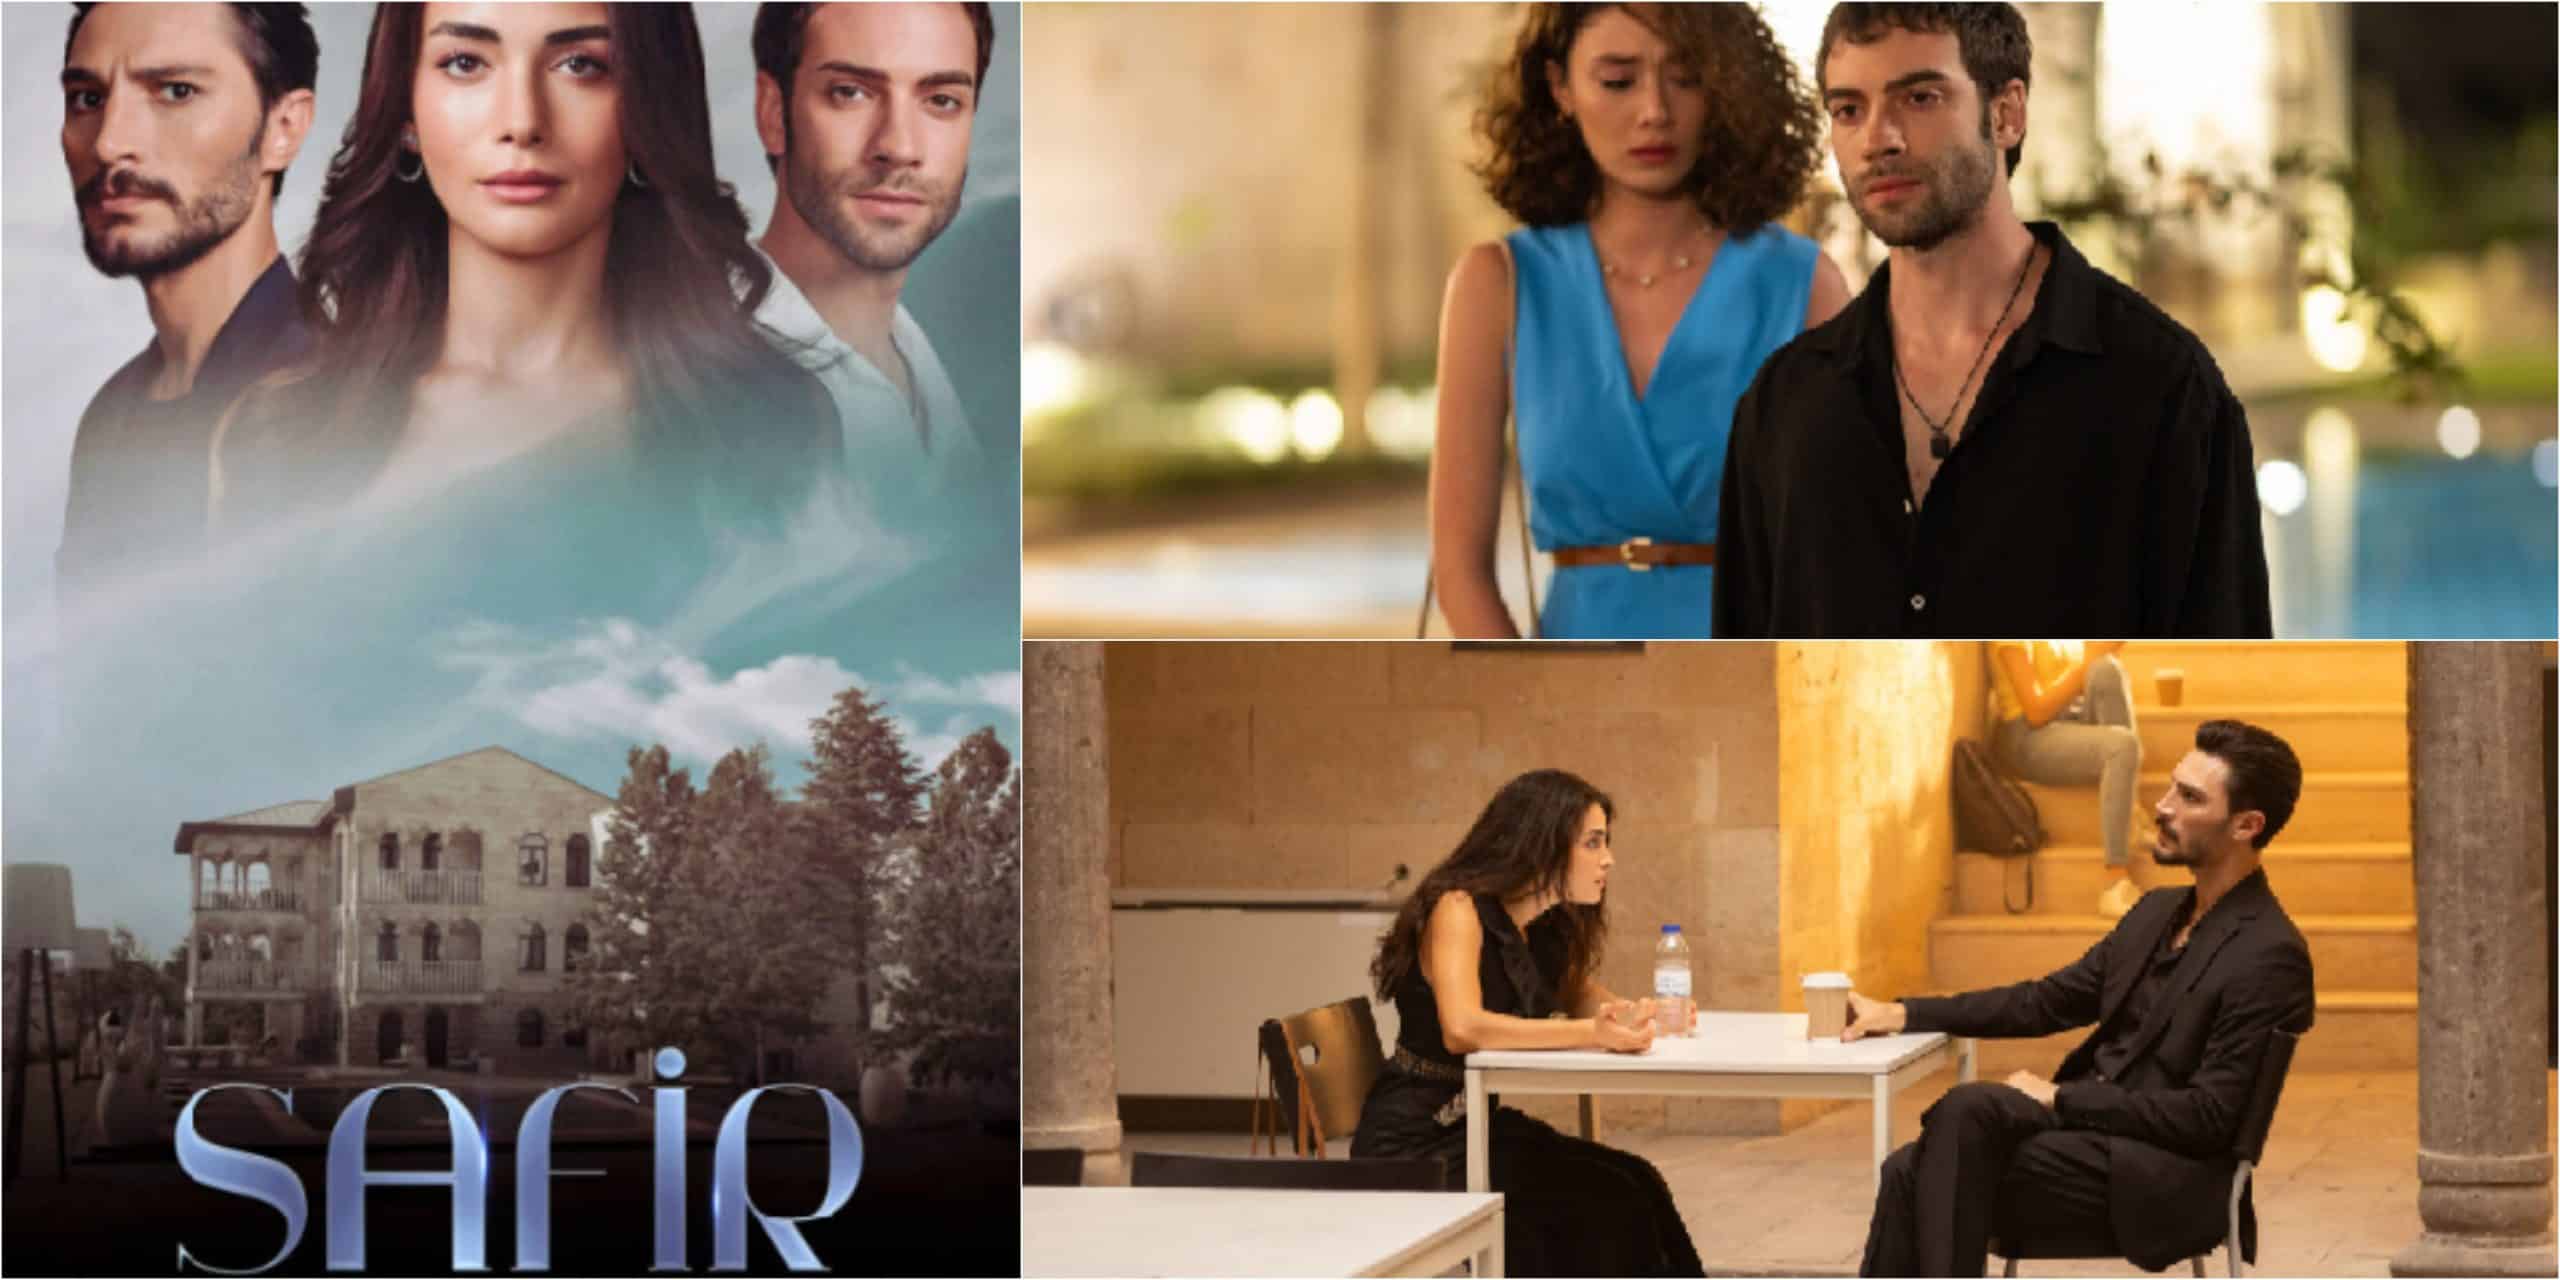 Turkish Romance Drama Safir Episode 3 Release Date